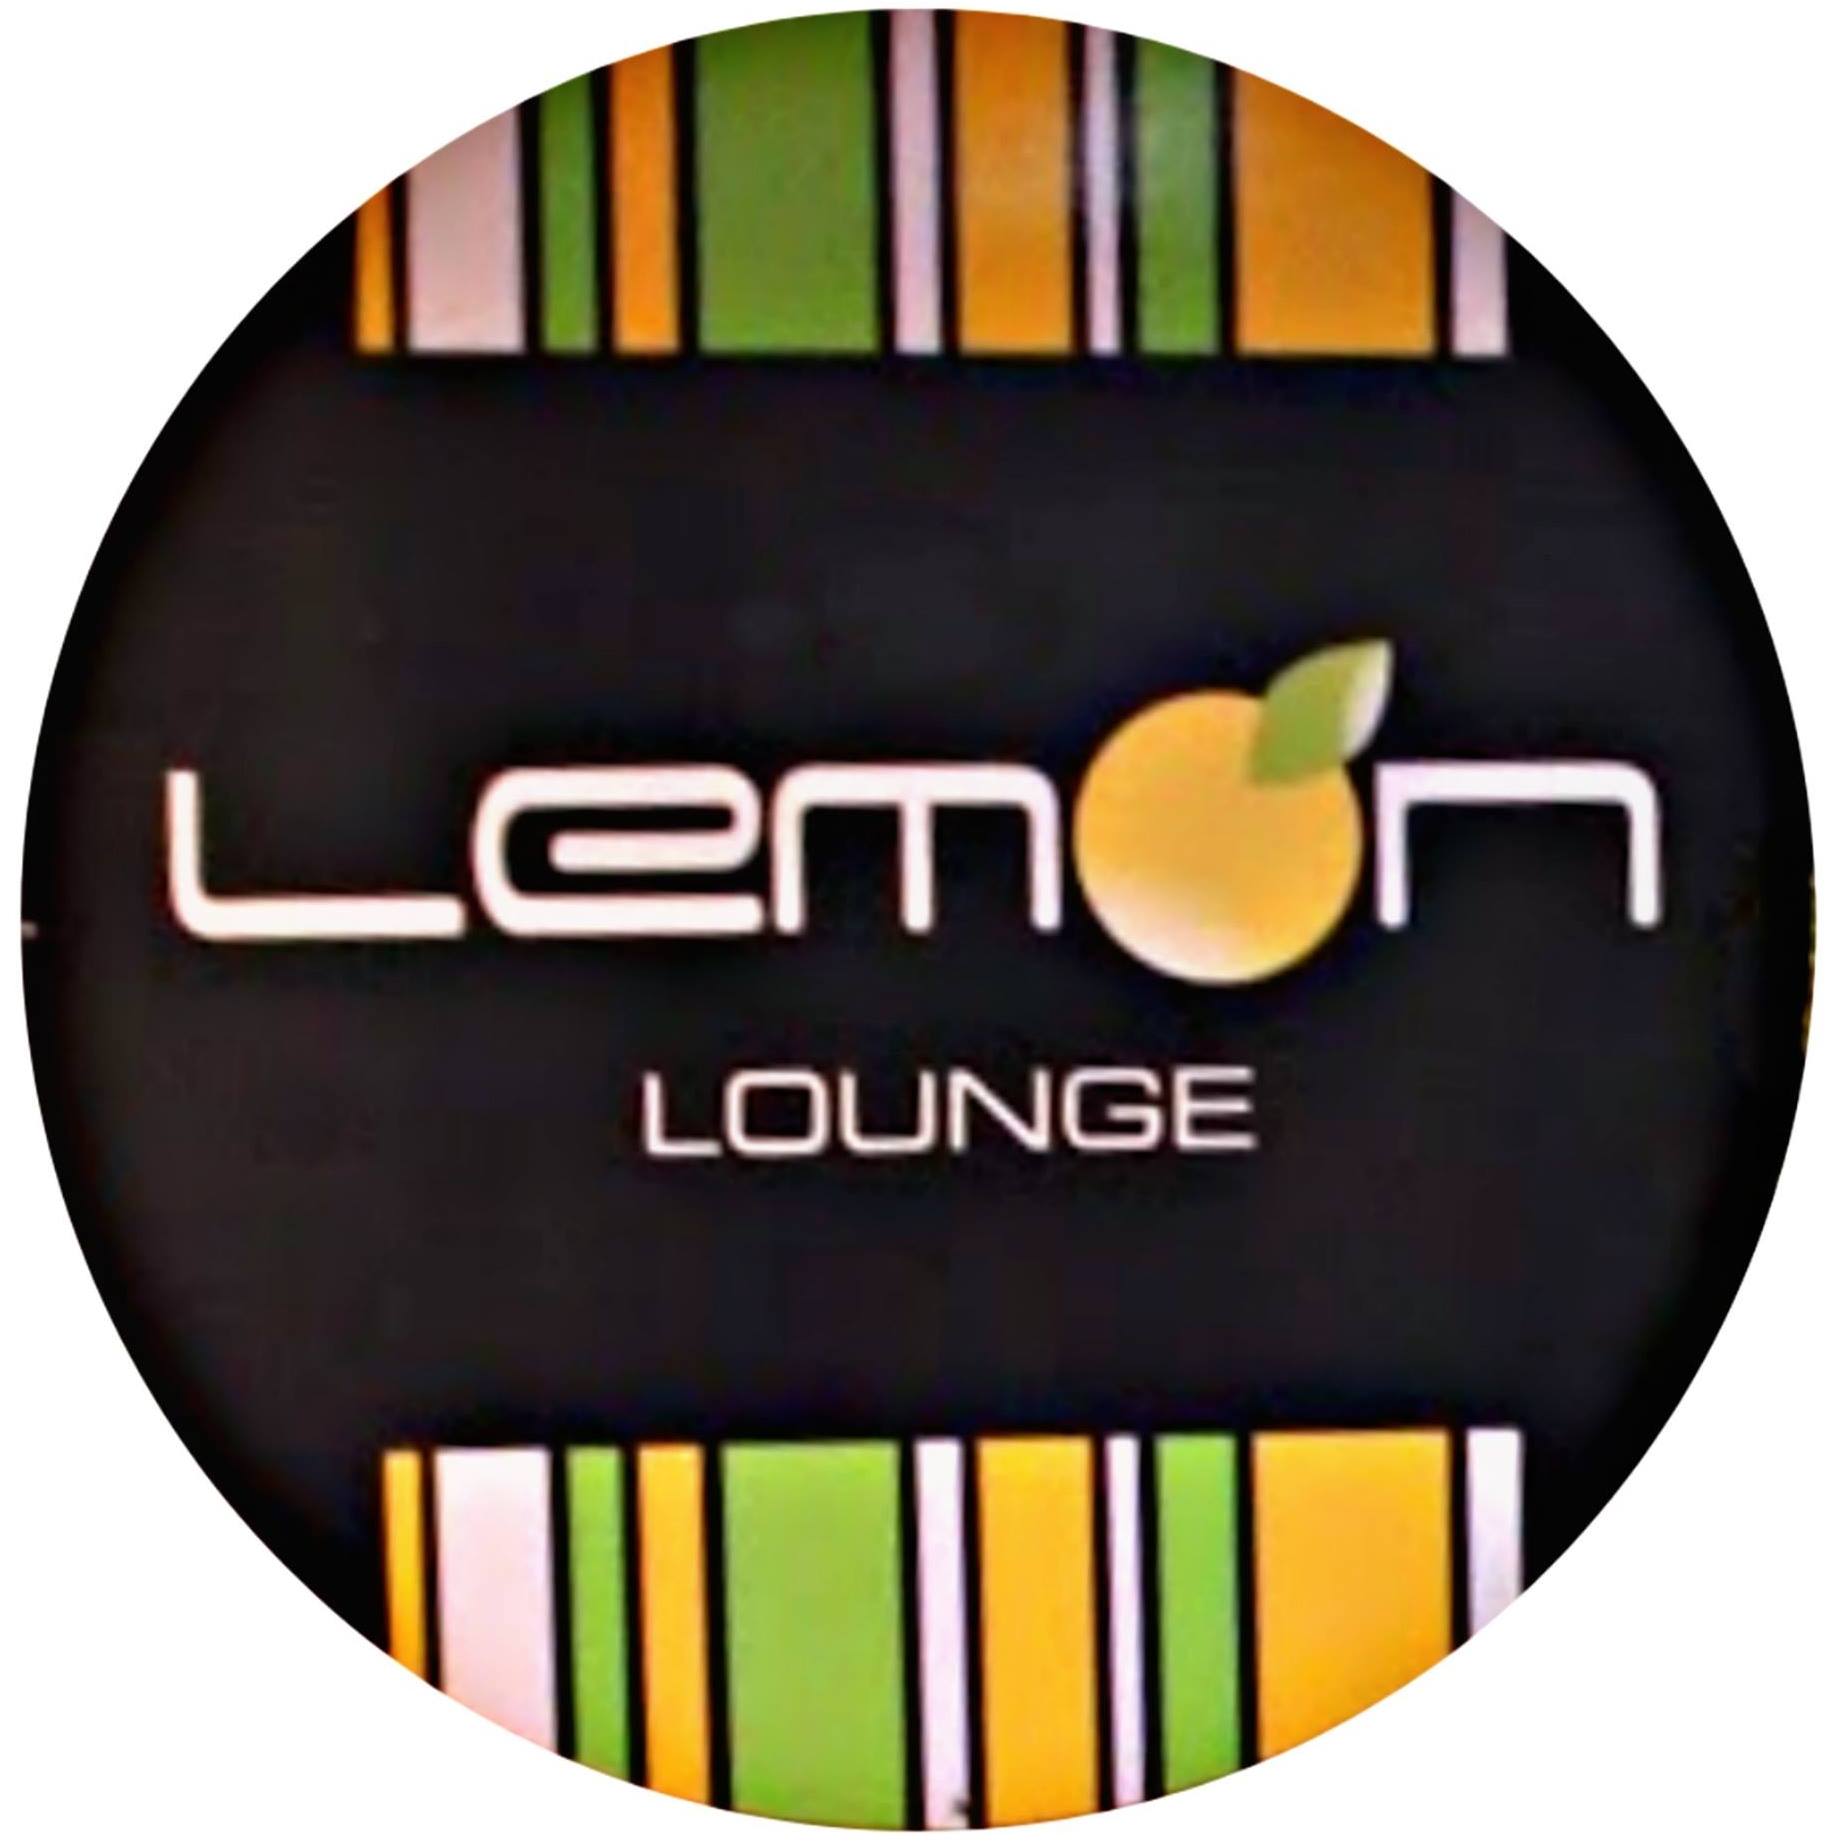 Lemon Lounge - Logo